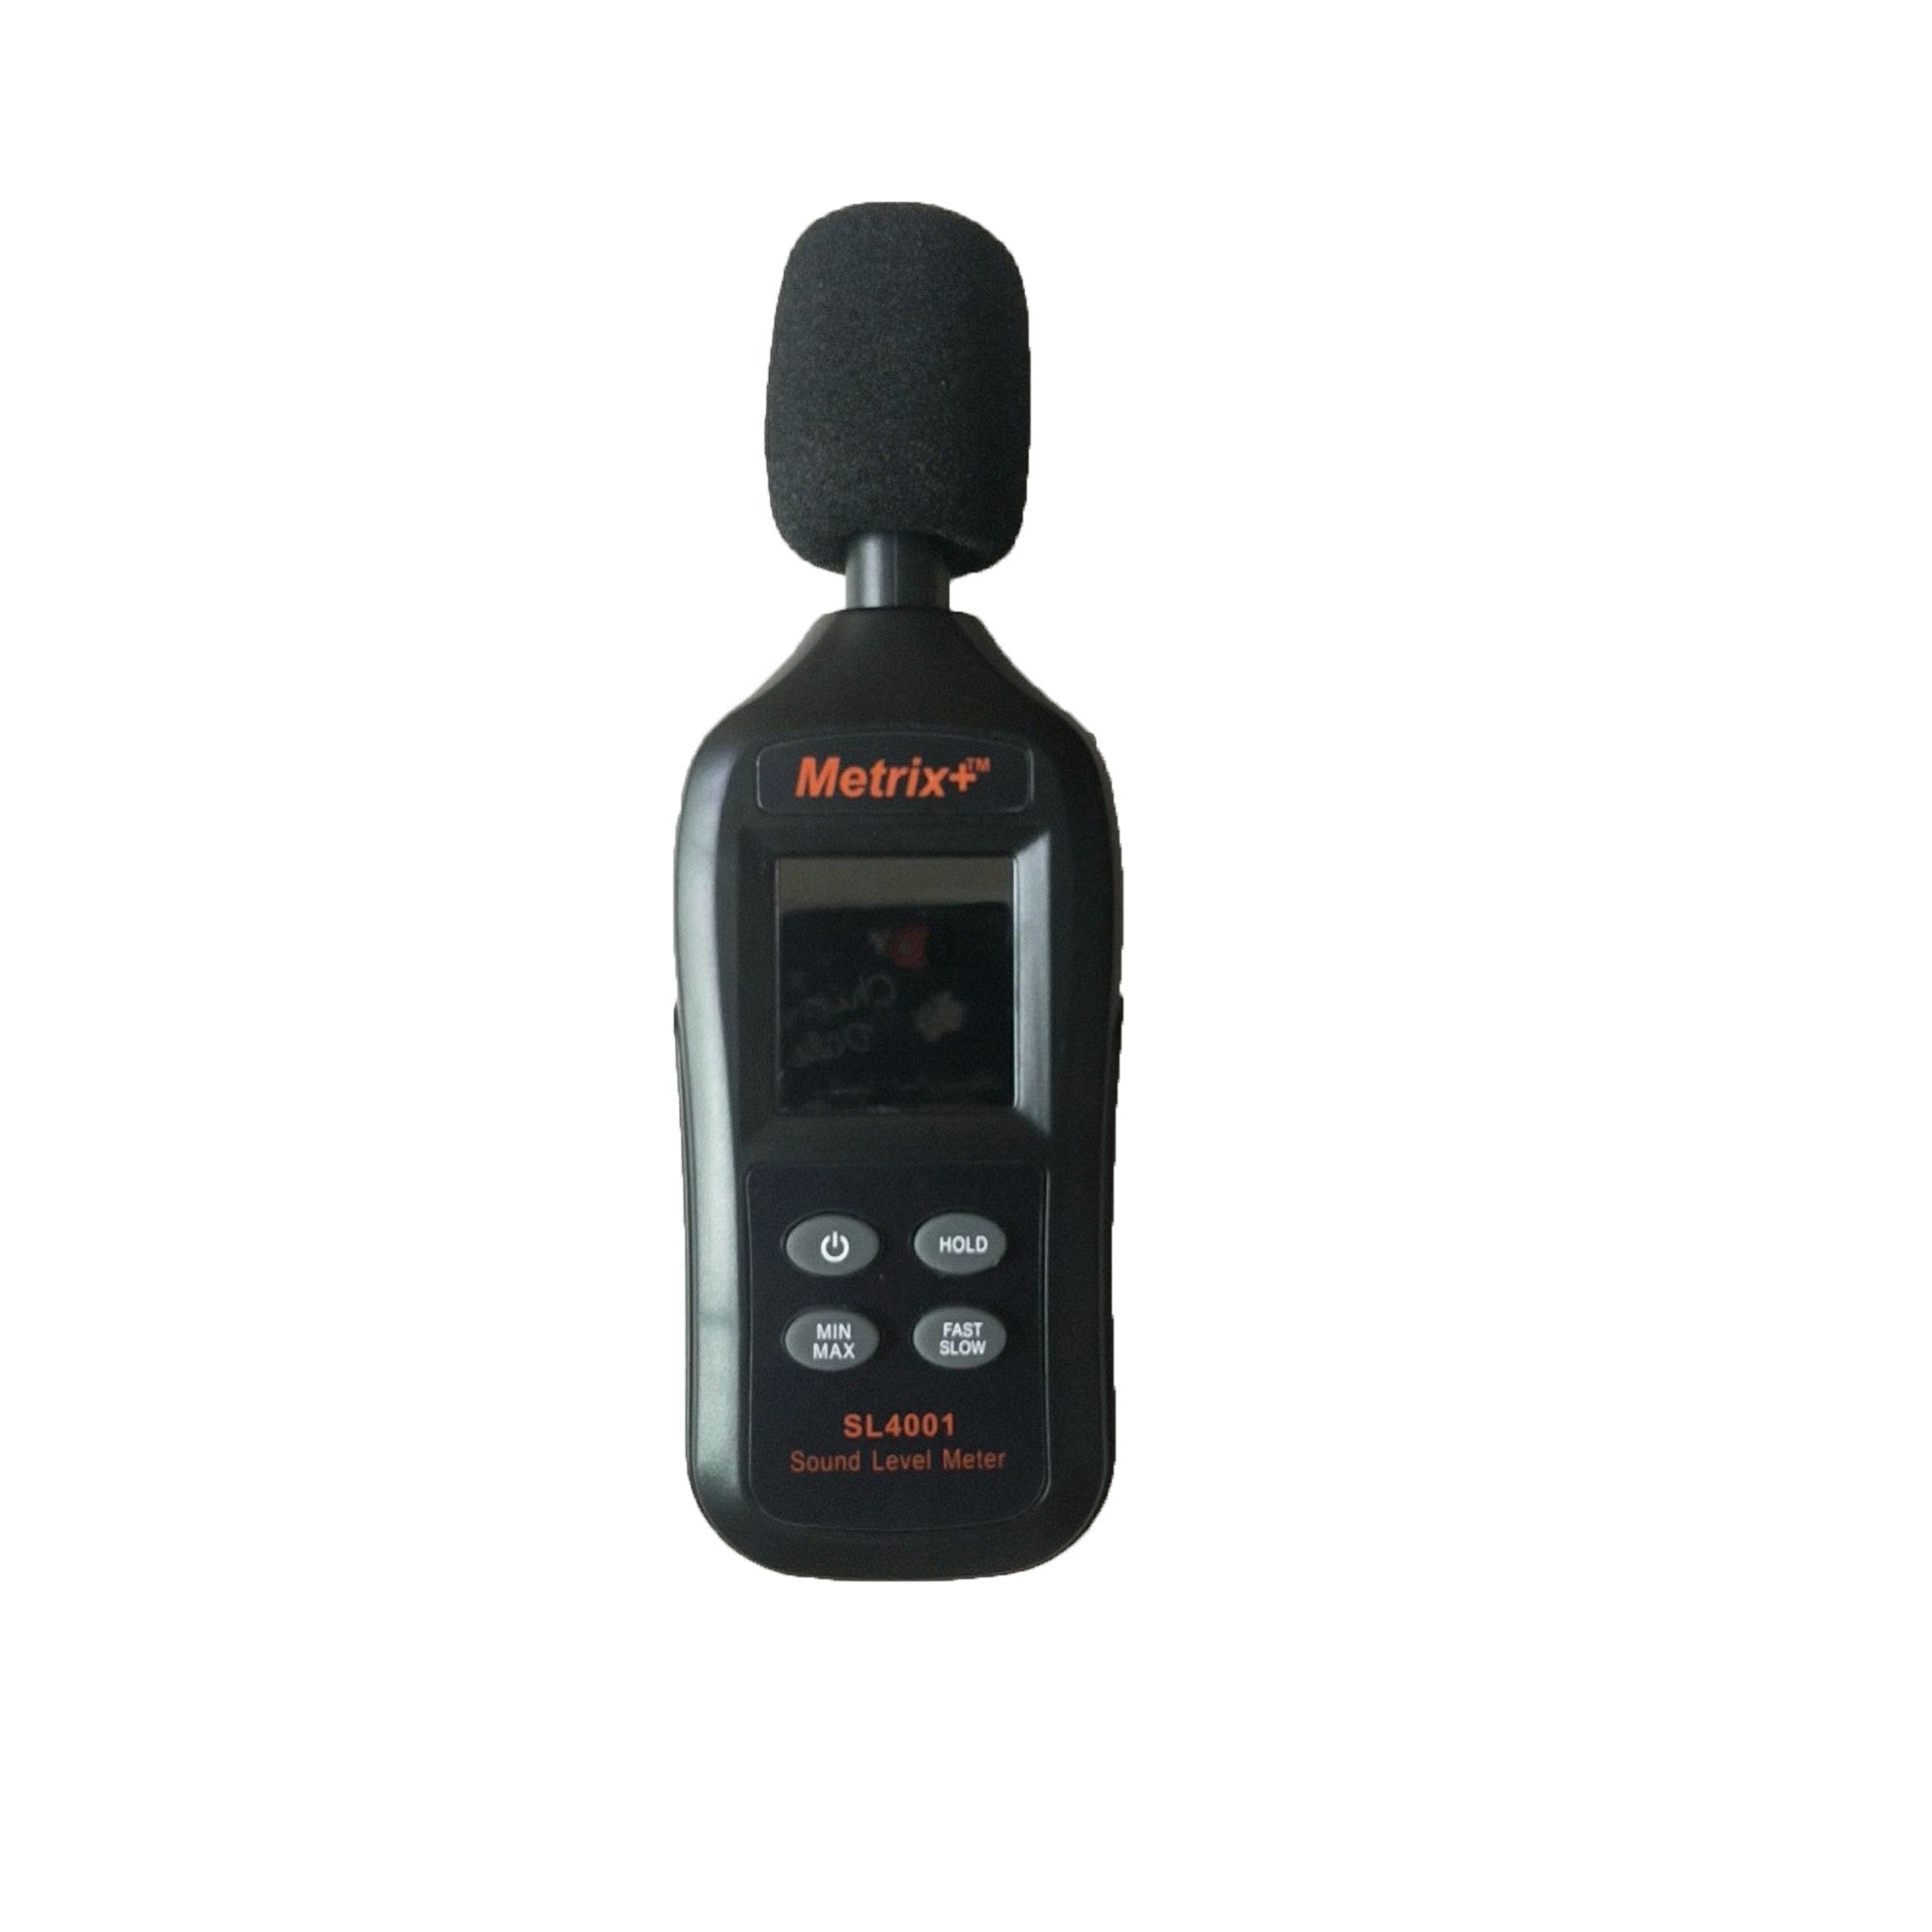 Metrix+ Digital Sound Level Meter SL 4001